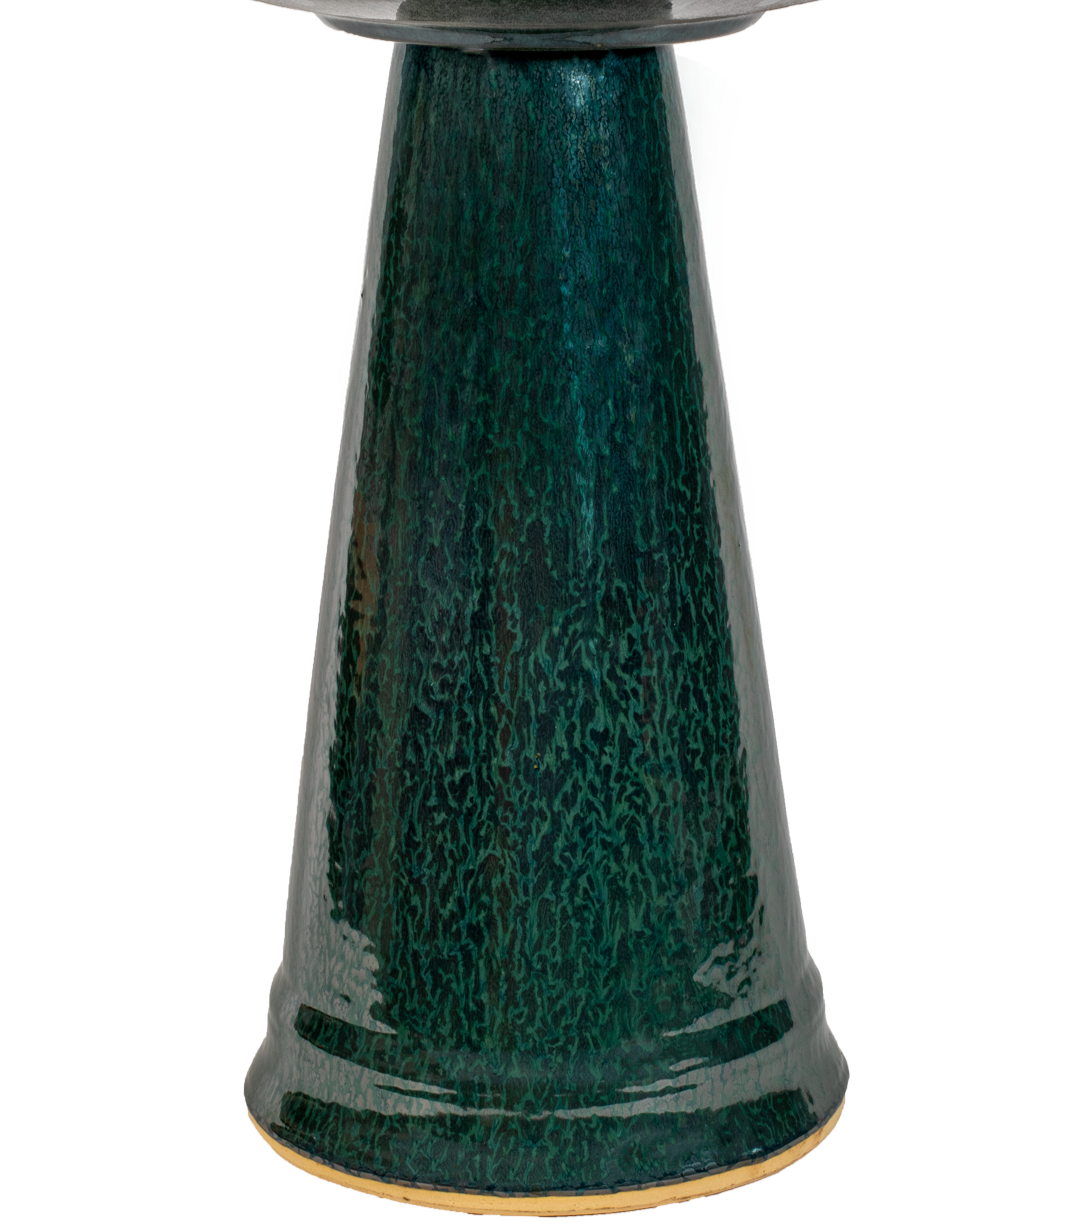 ceramic dark green birdbath pedestal with a simple clean modern design